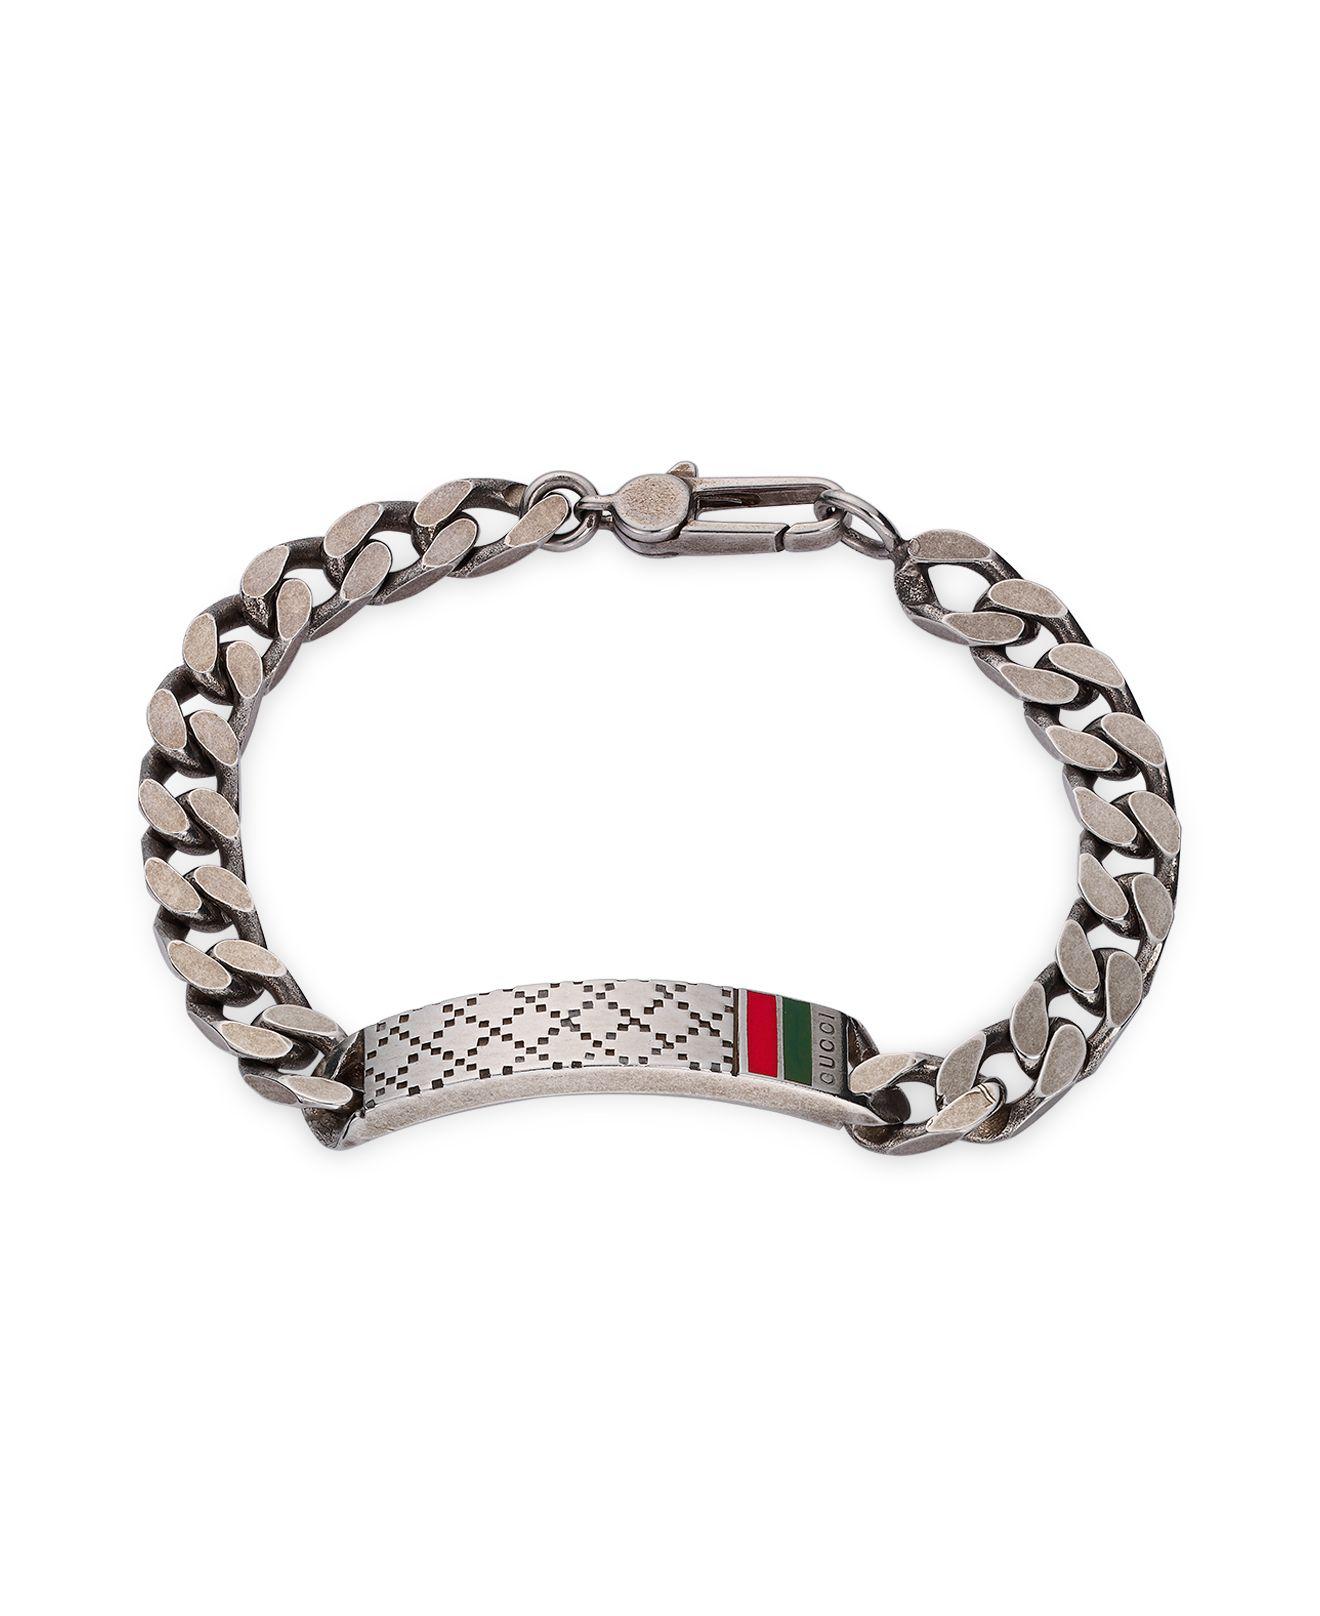 Lyst - Gucci Men's Bracelet With Diamantissima Motif in Metallic for Men